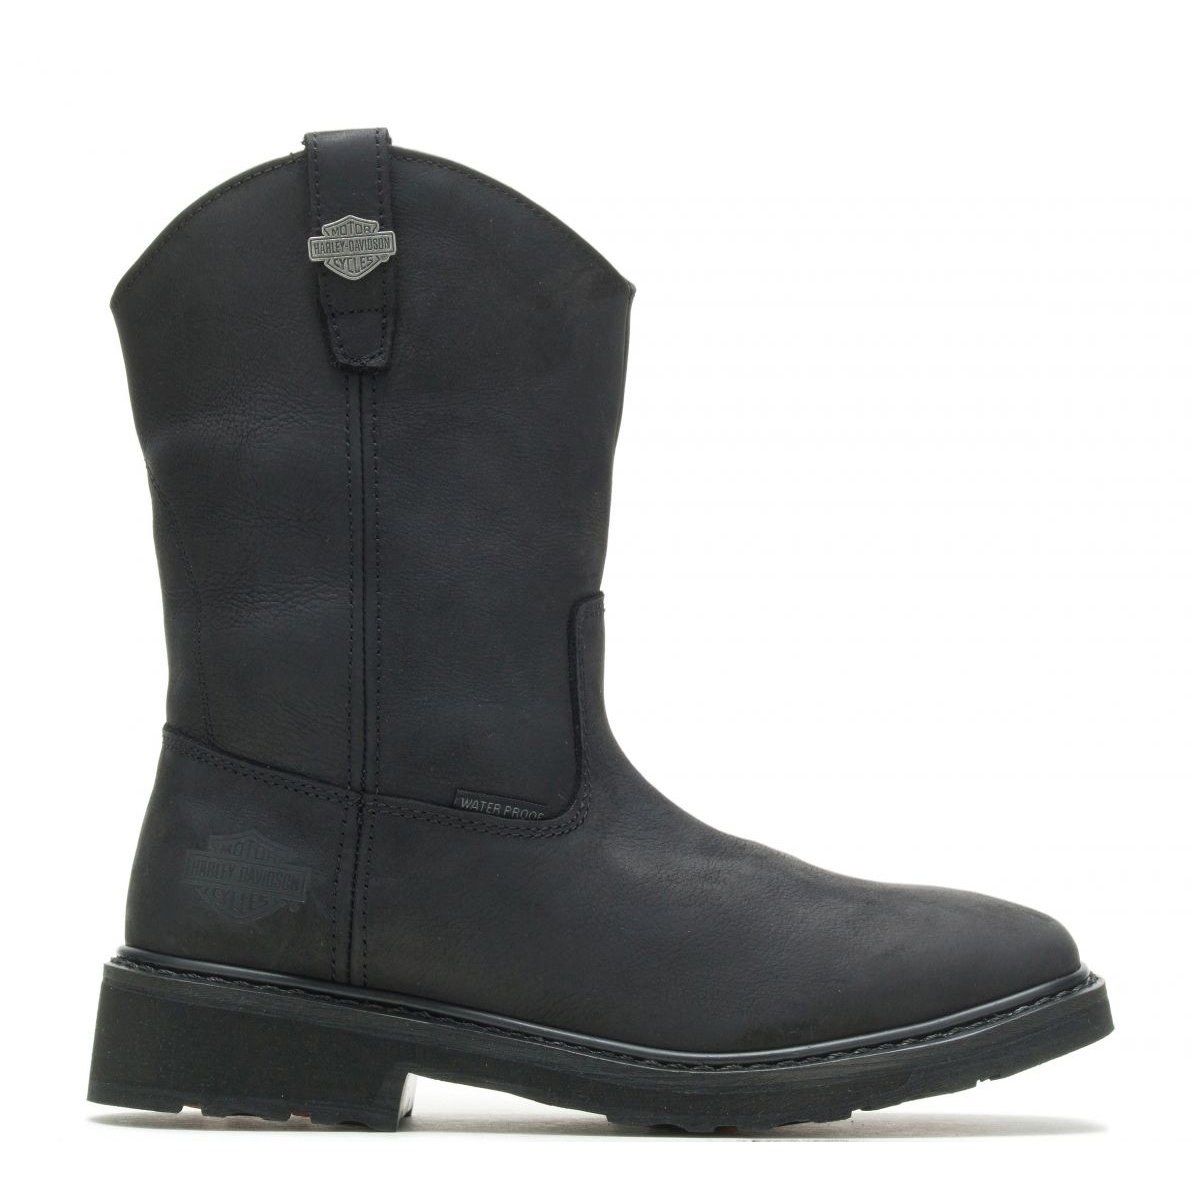 HARLEY-DAVIDSON WORK Men's Altman Western Classic Soft Toe Work Boot Black - D93561 Black/black - Black/black, 9.5